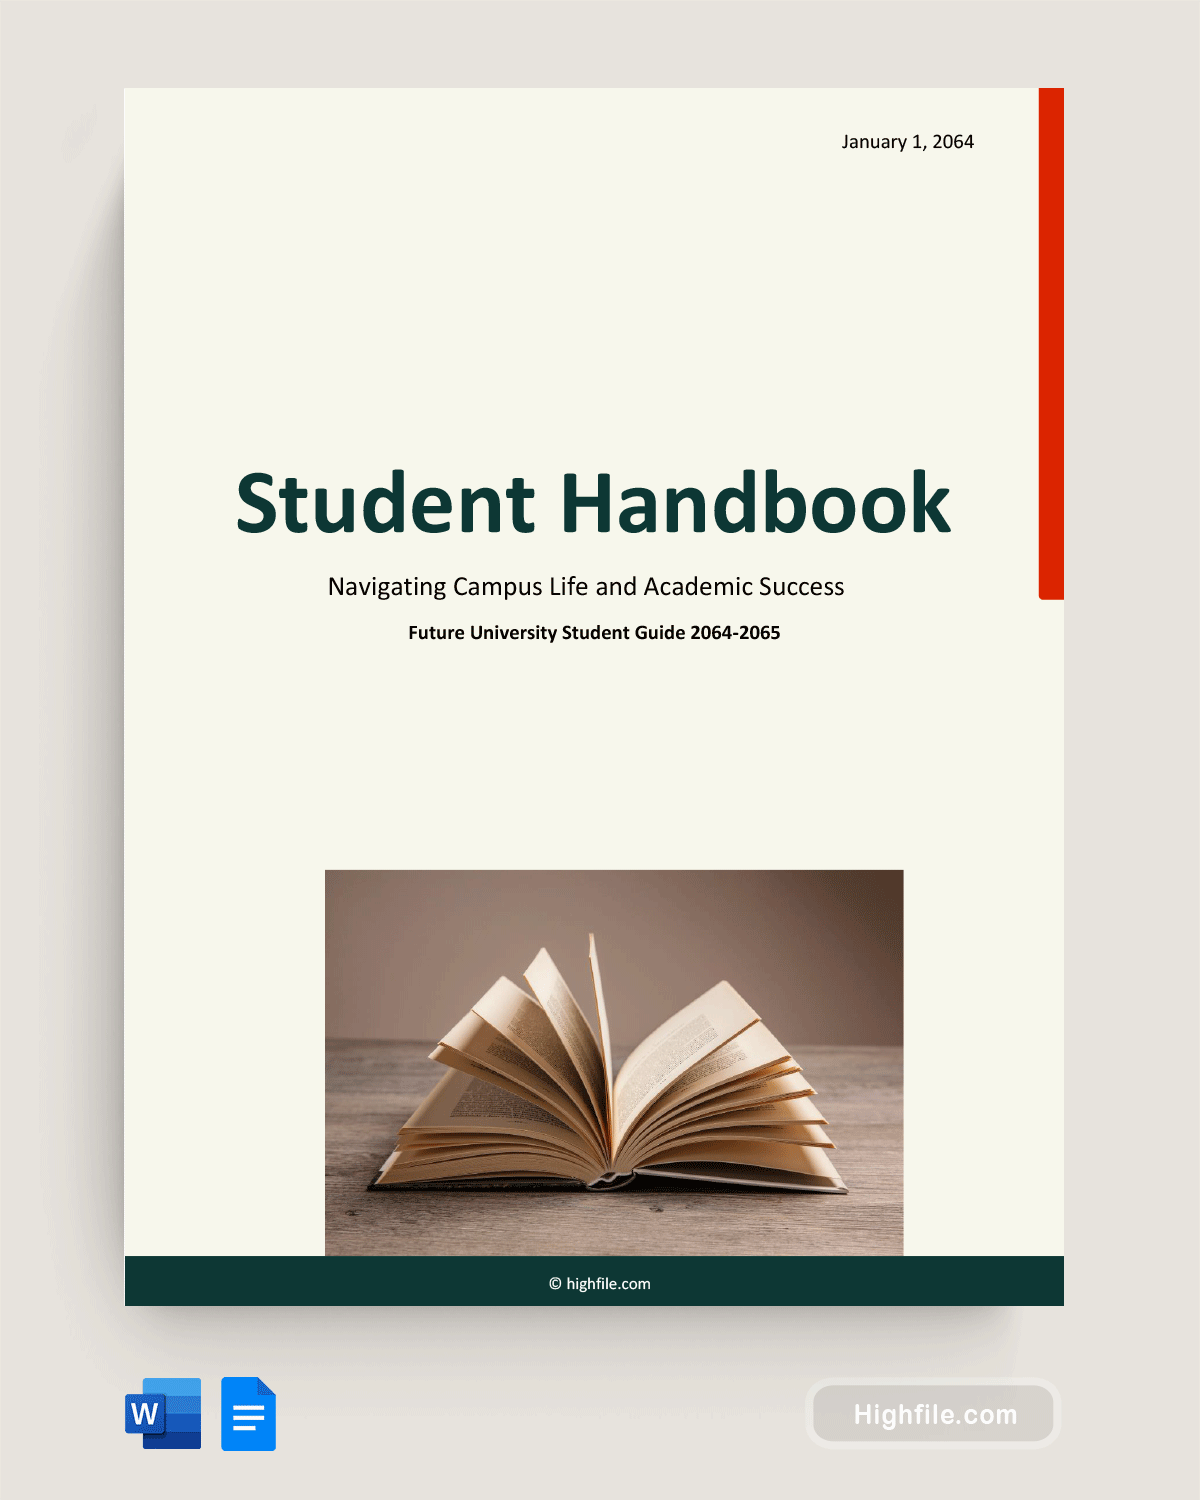 Student Handbook Template - Word, Google Docs